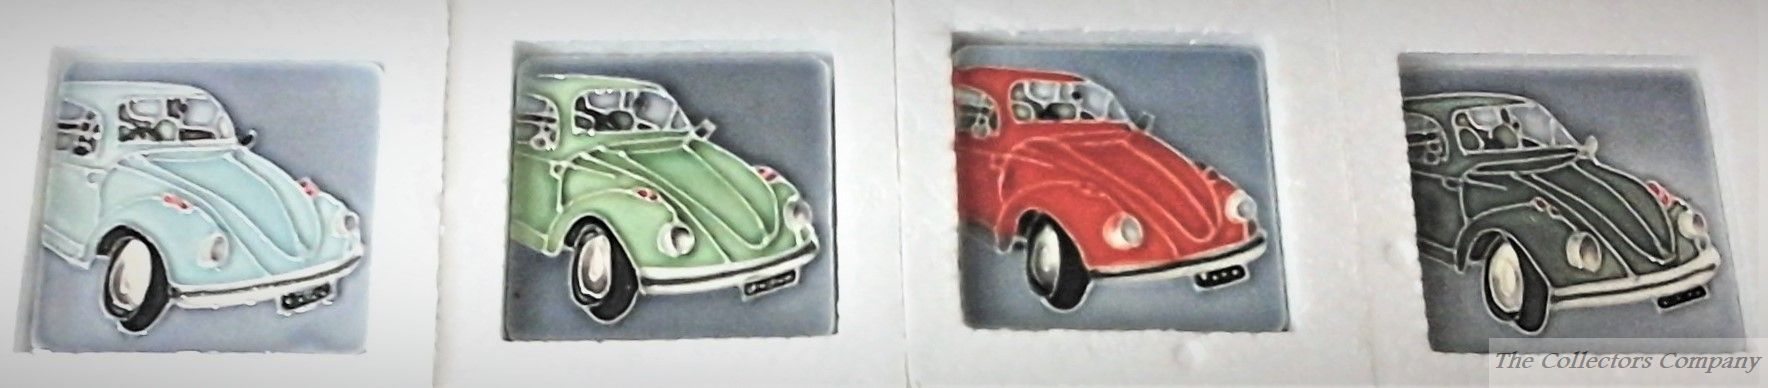 VW Beetle Ceramic Fridge Magnets set 